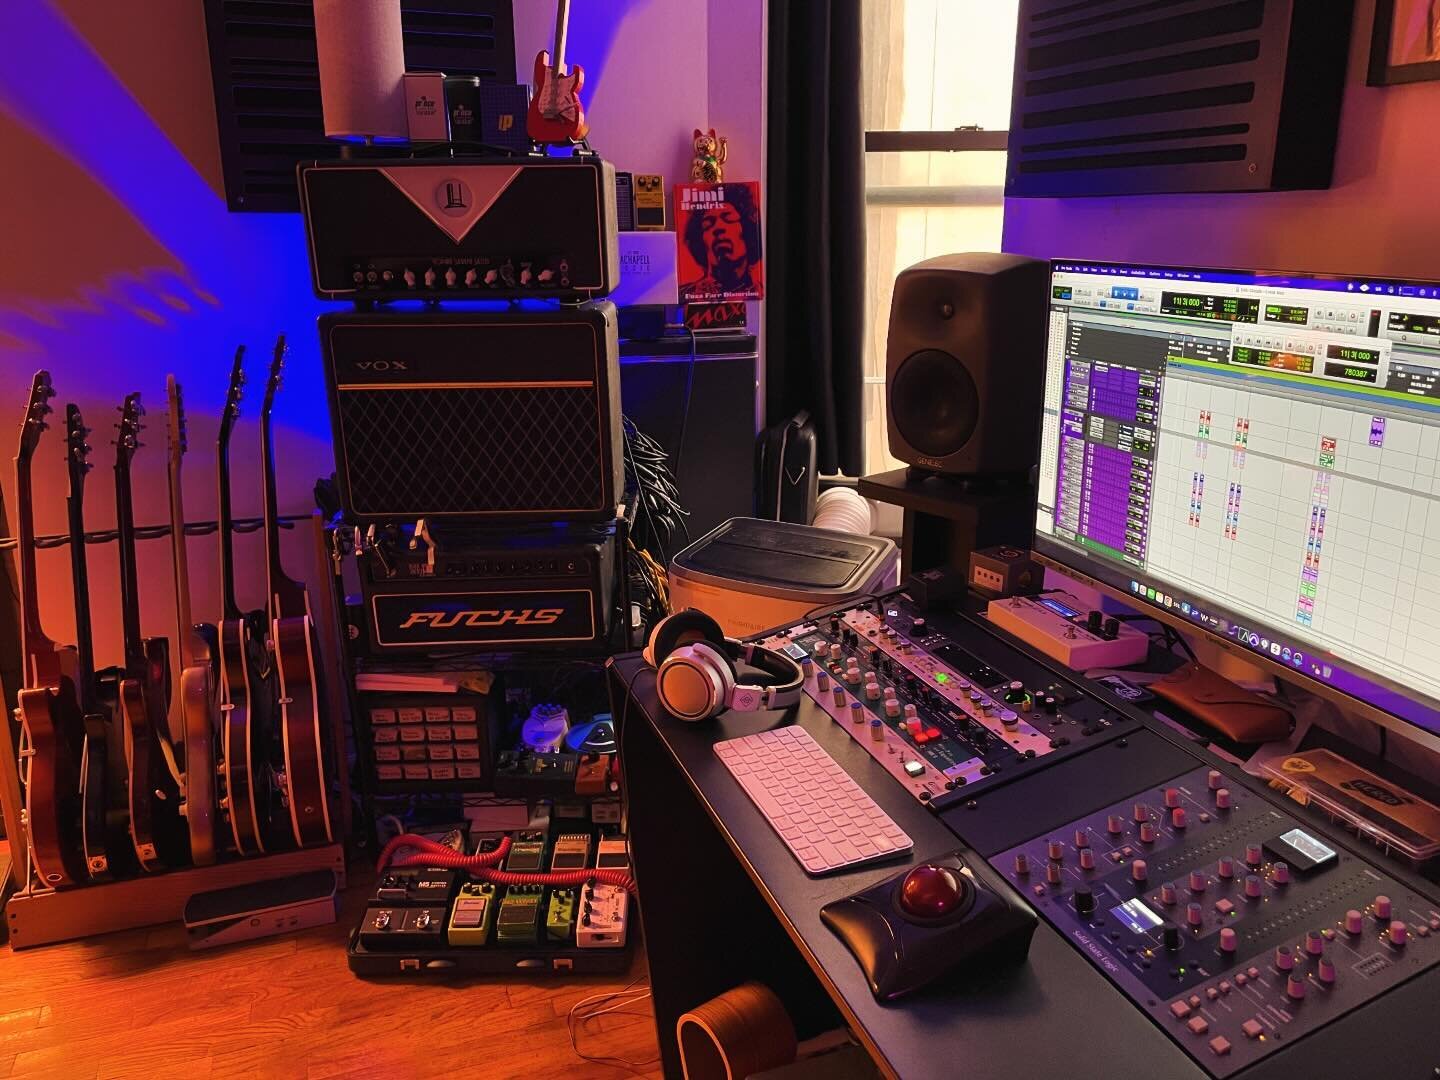 Mix day 🎧
.
.
.
#recording #studio #musician #guitars #sessionmusician #producer #recordproducer #homestudio #audioengineer #genelec #sslaudio #uaudio #protools #audioscapeengineering